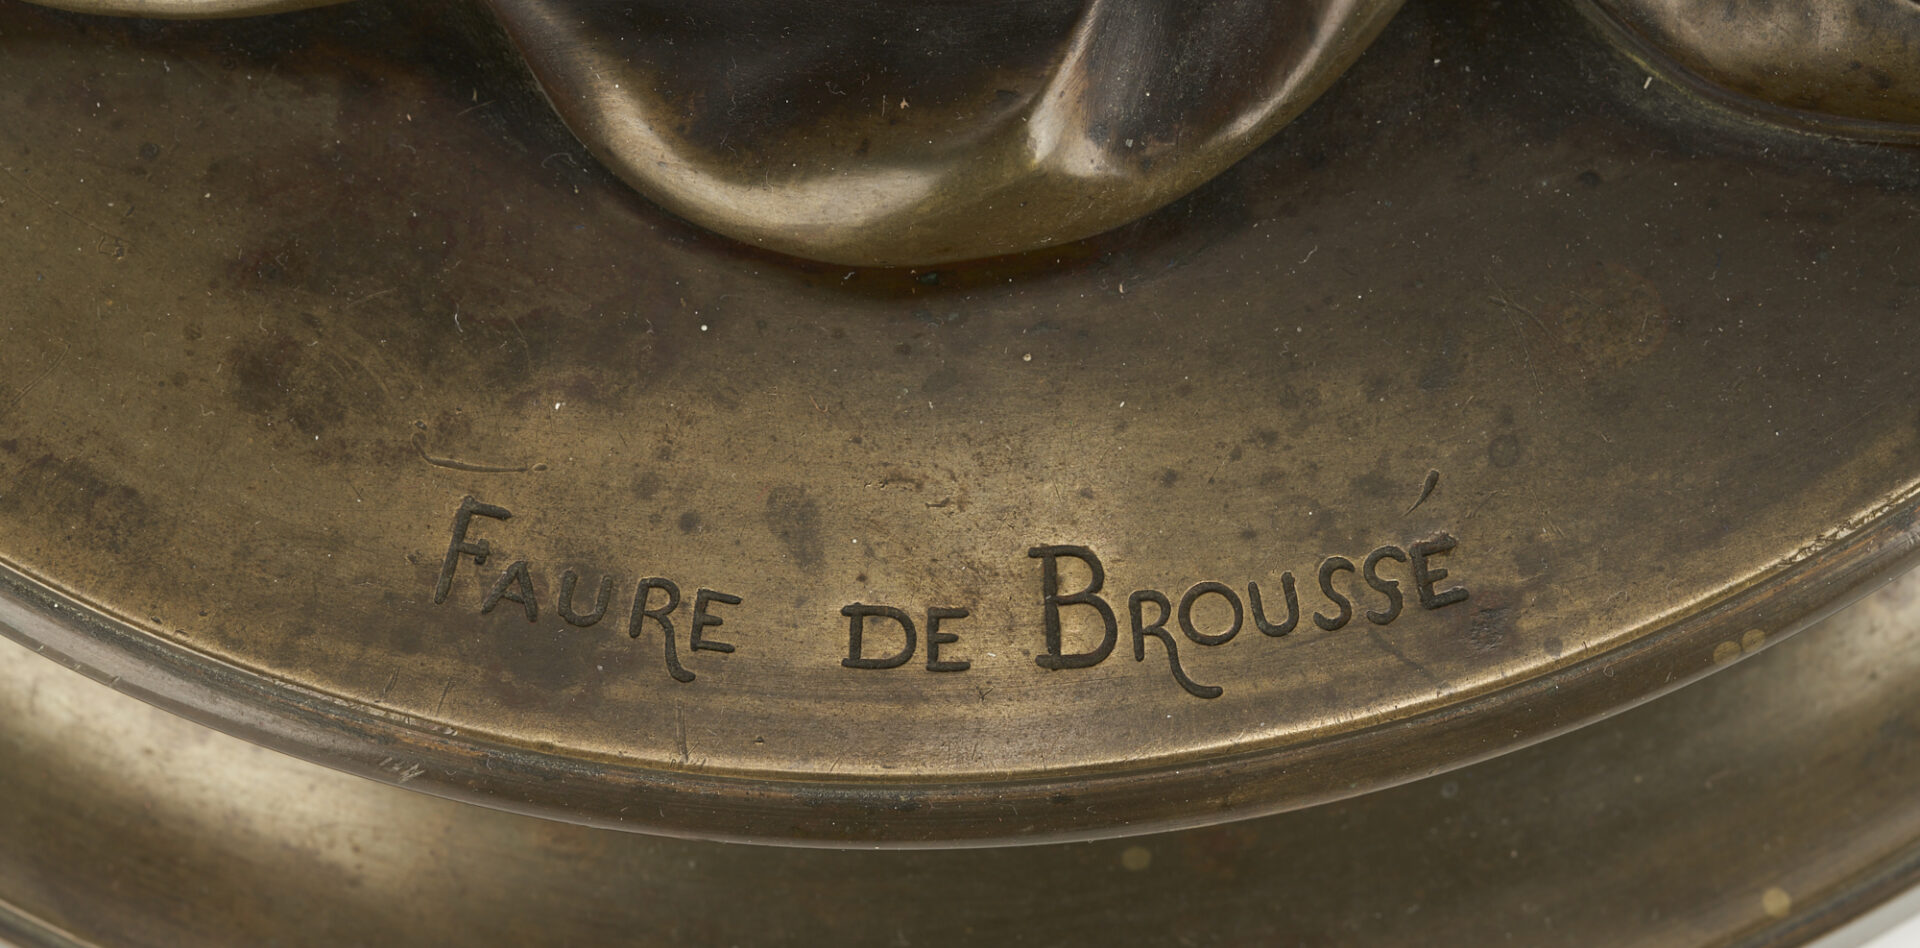 Lot 375: Vincent Faure de Brousse, Bronze Sculpture of Lovers and Musical Instrument